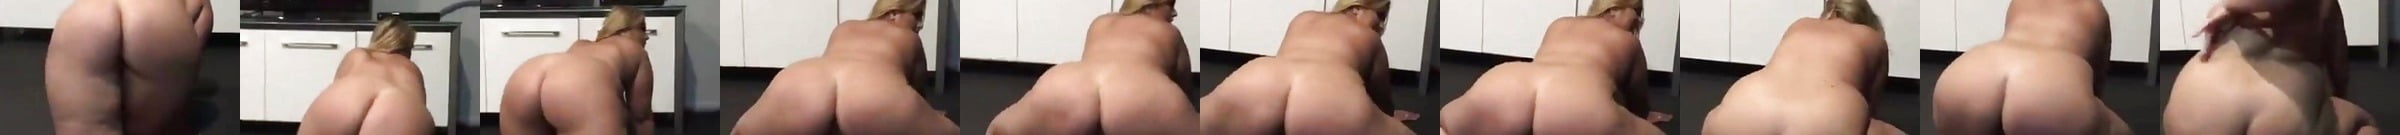 Big Fat Booty Porn Videos Xhamster